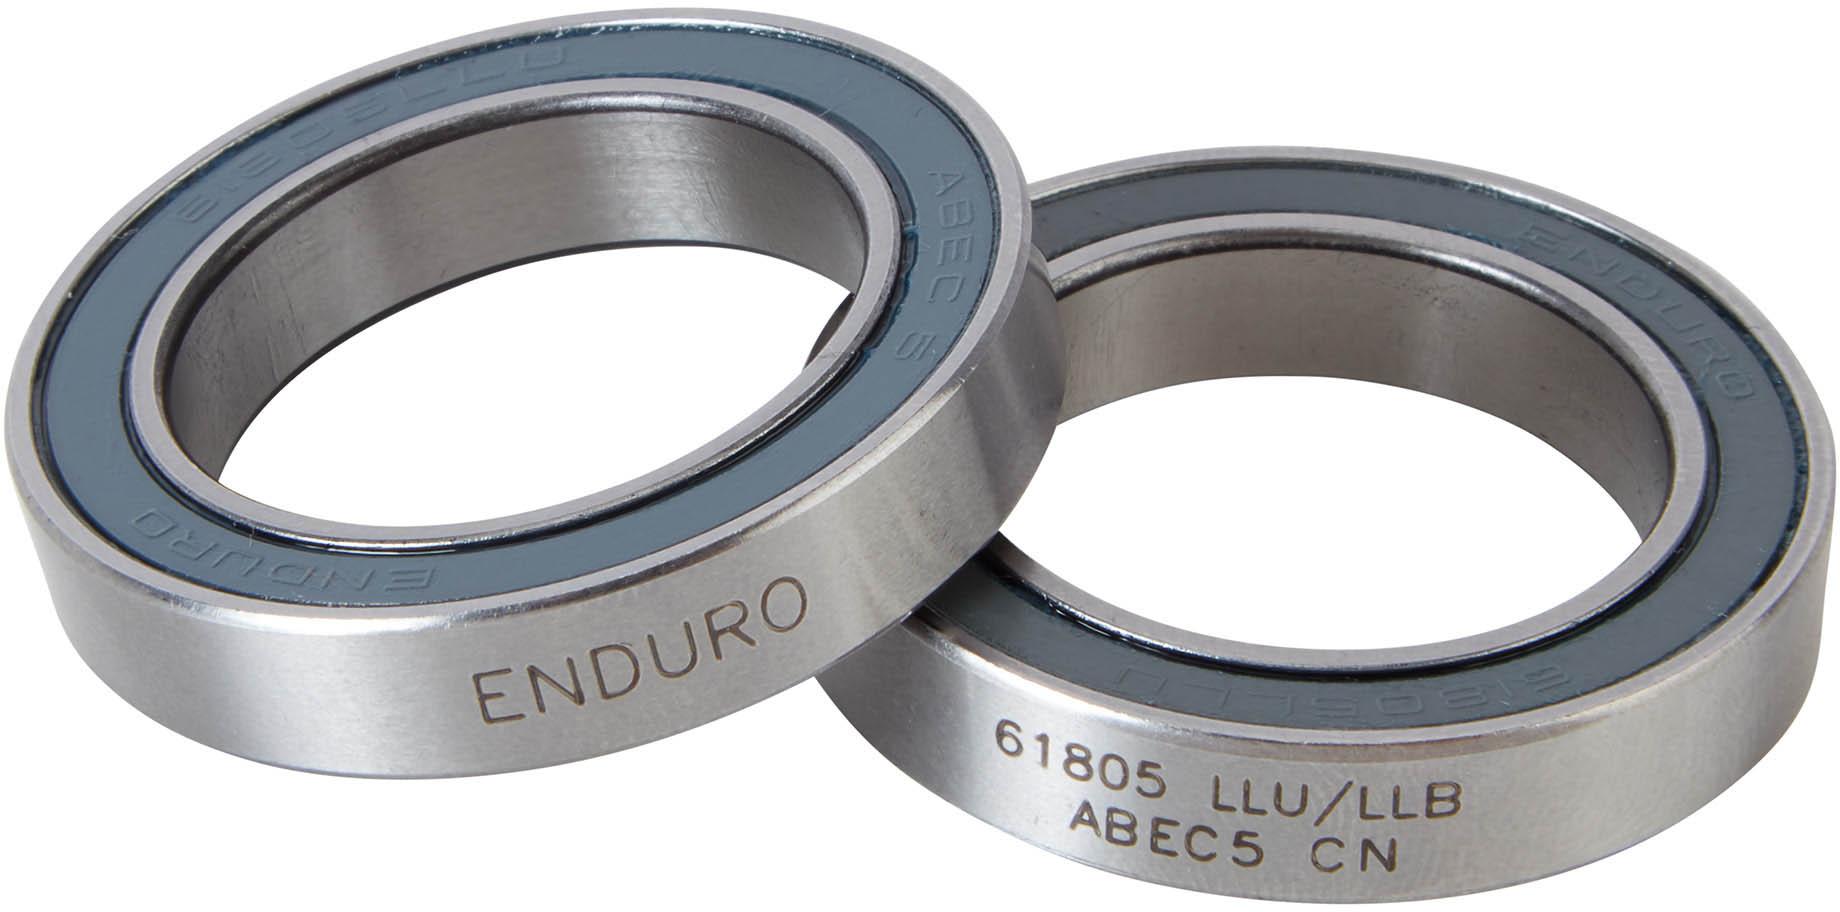 Nukeproof Enduro Abec5 V2 Mtb Hub Bearings (61805)  Silver